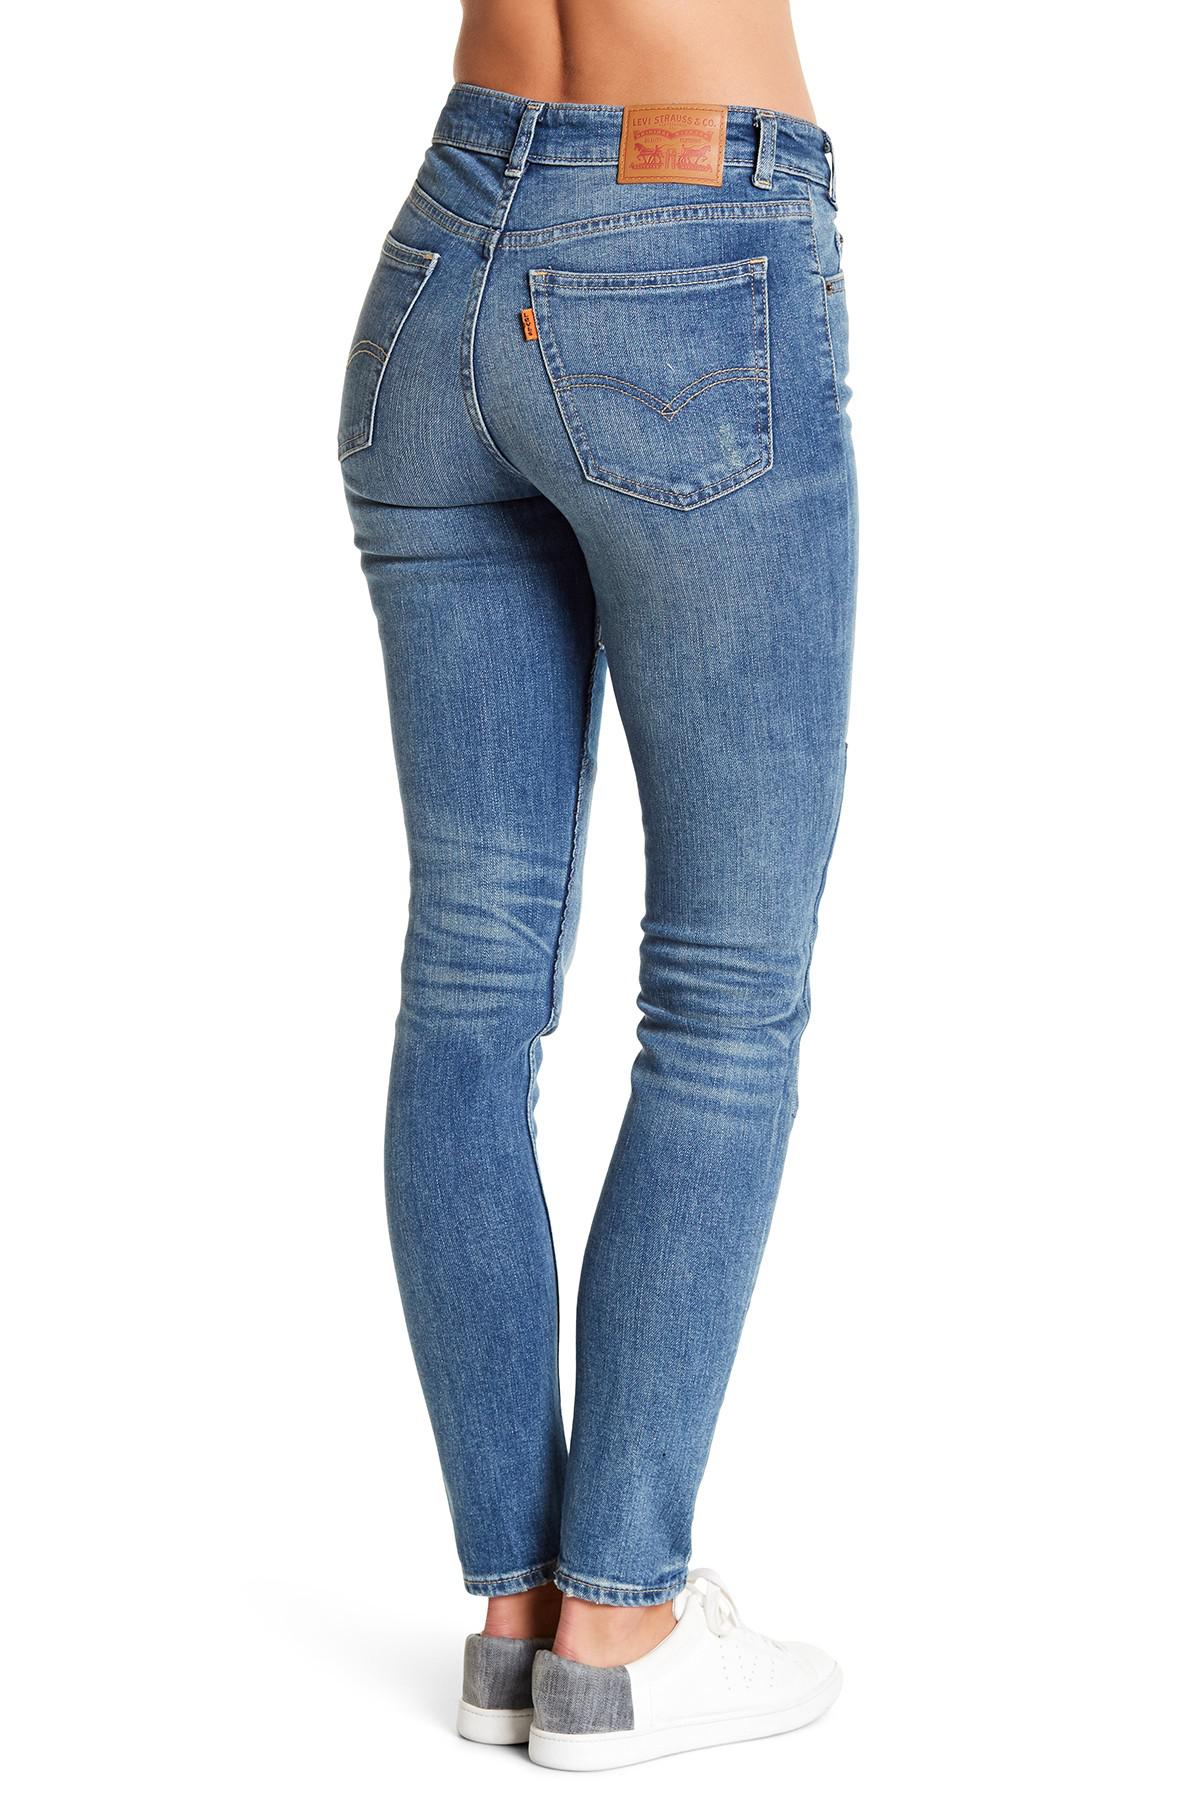 Levi's Orange Tab 721 Vintage Waist Jeans in Blue | Lyst